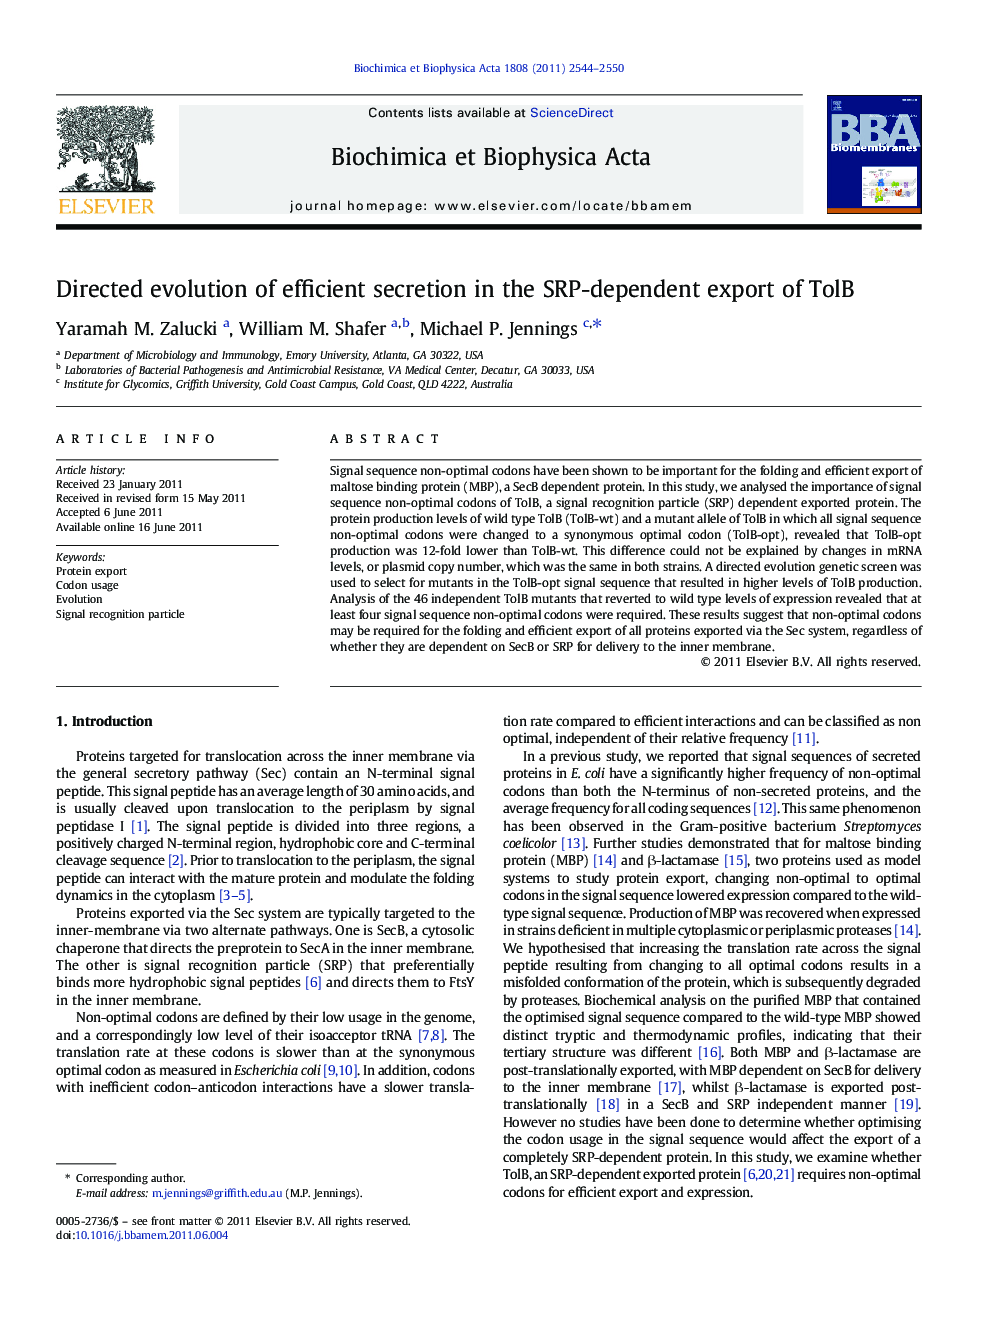 Directed evolution of efficient secretion in the SRP-dependent export of TolB